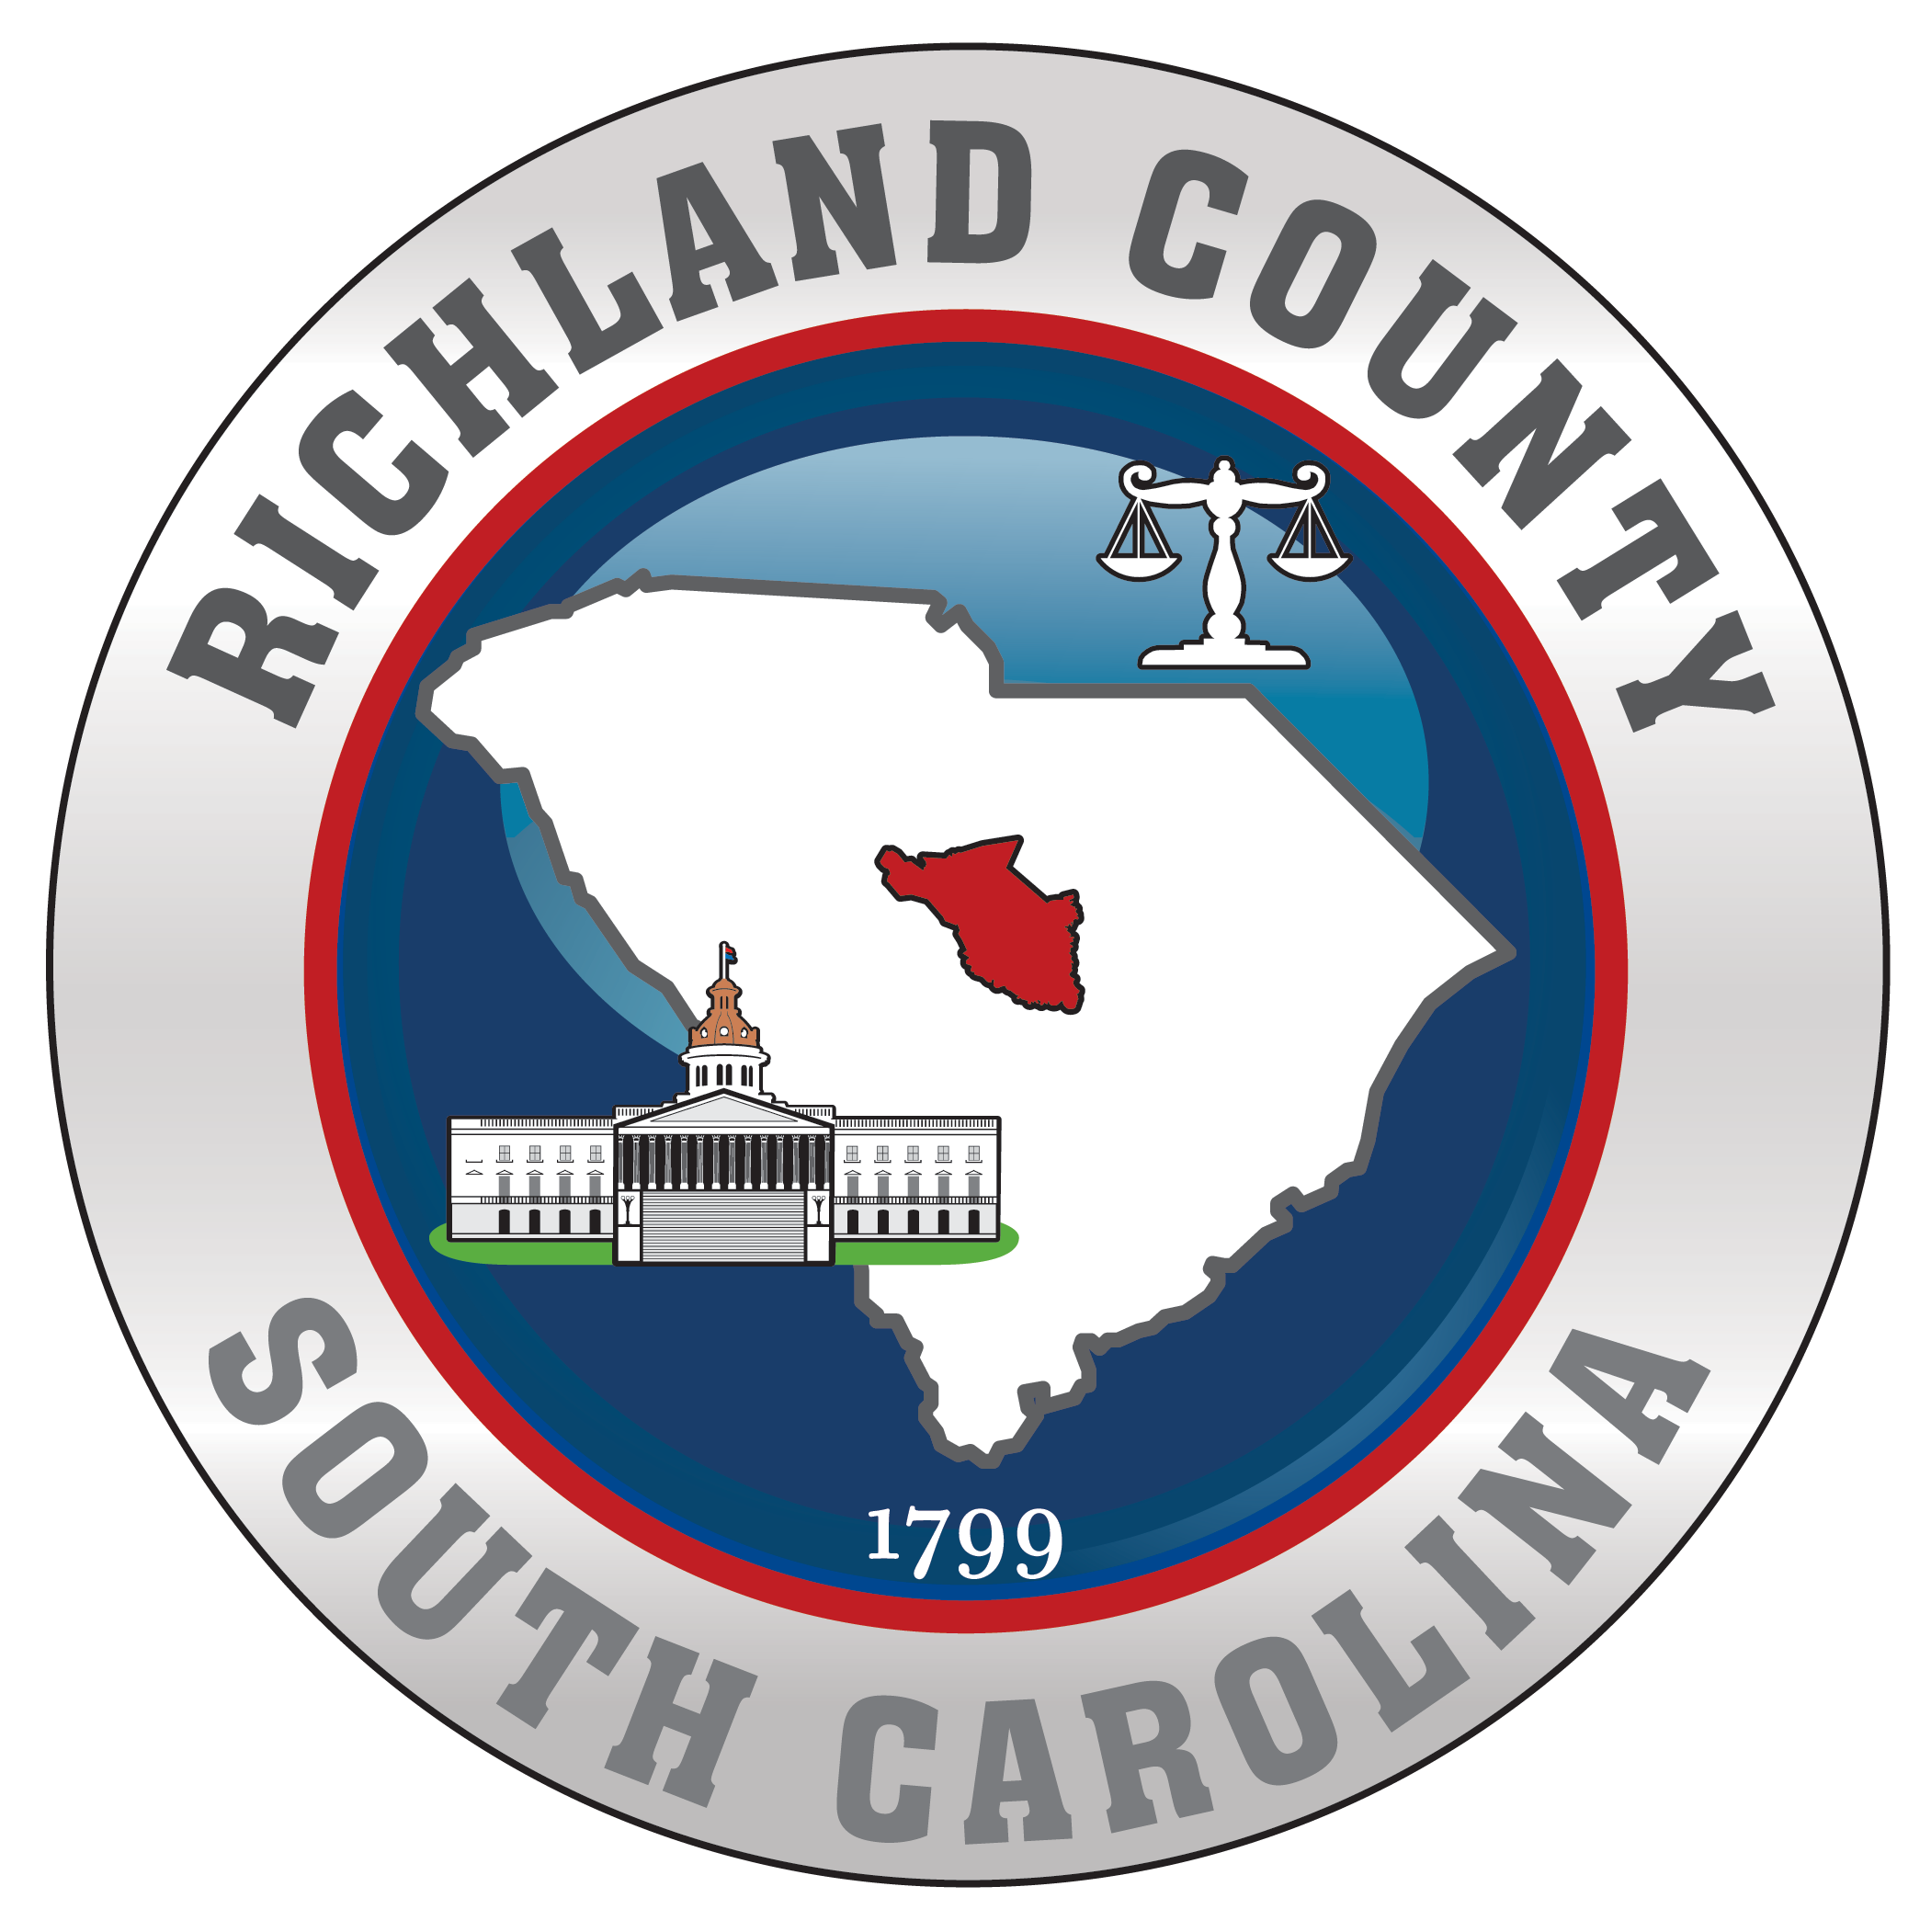 RC logo